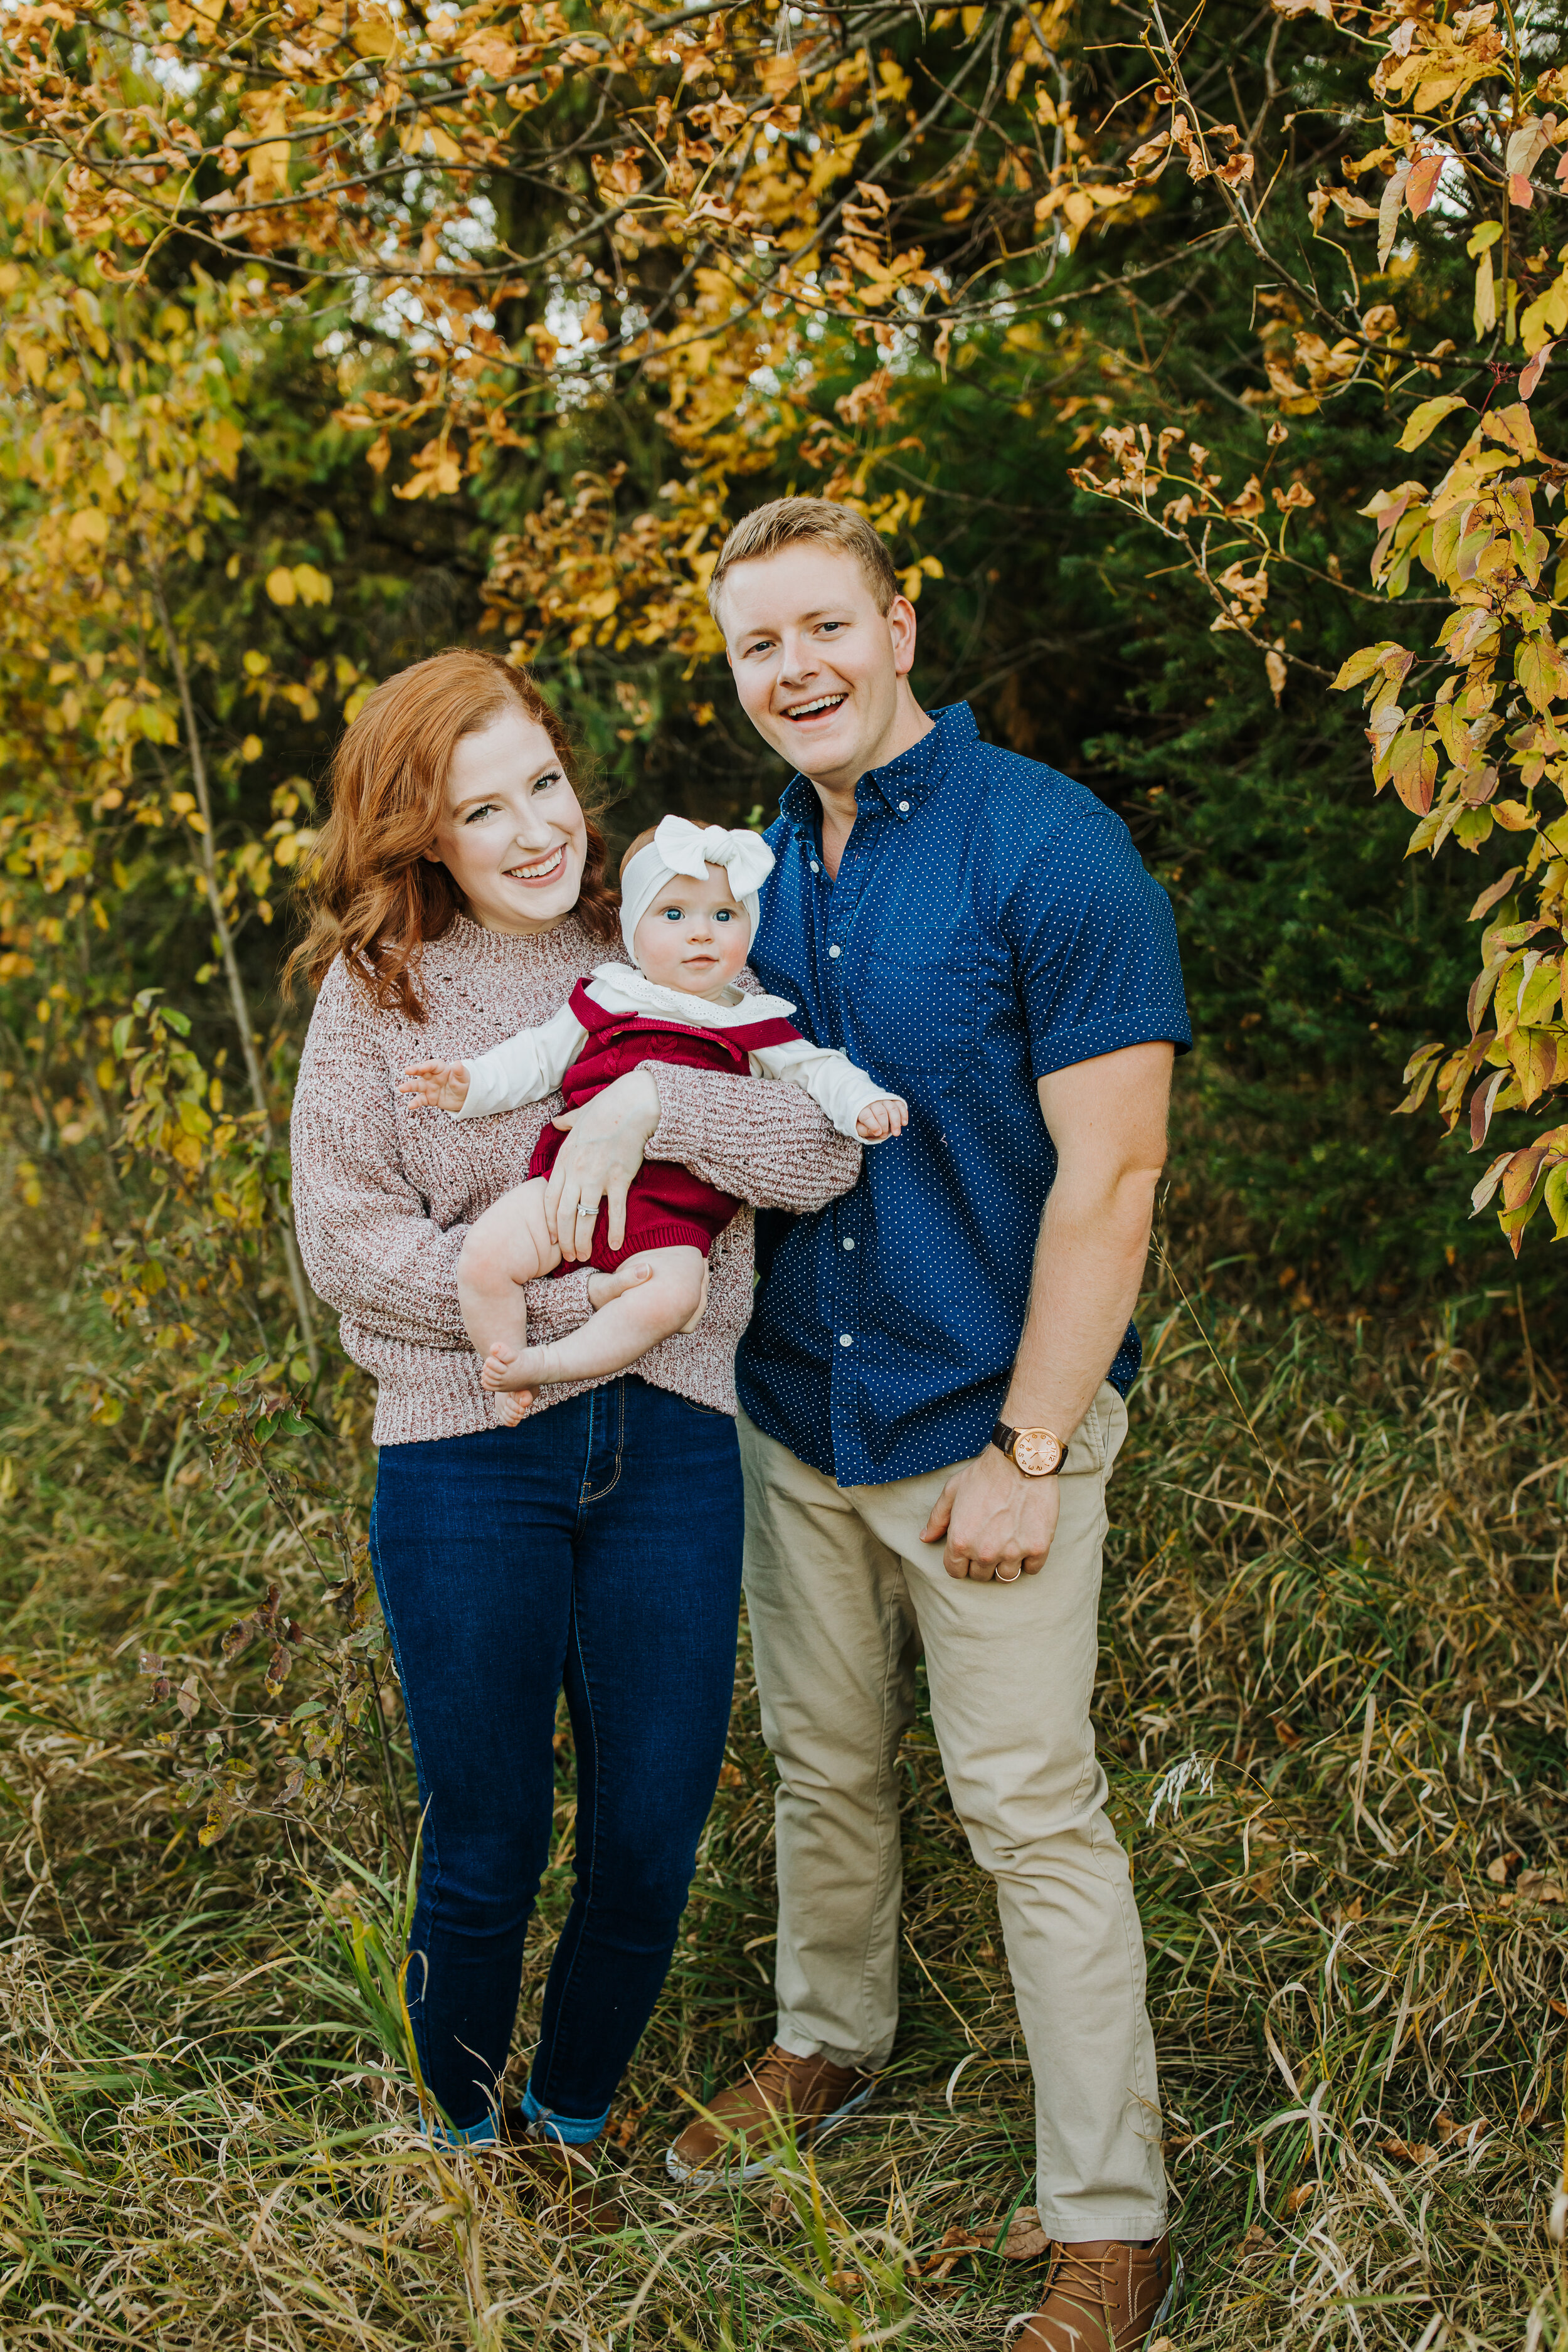 Unger Family Photos 2020 - Nathaniel Jensen Photography - Omaha Nebraska Family Photographer-19.jpg